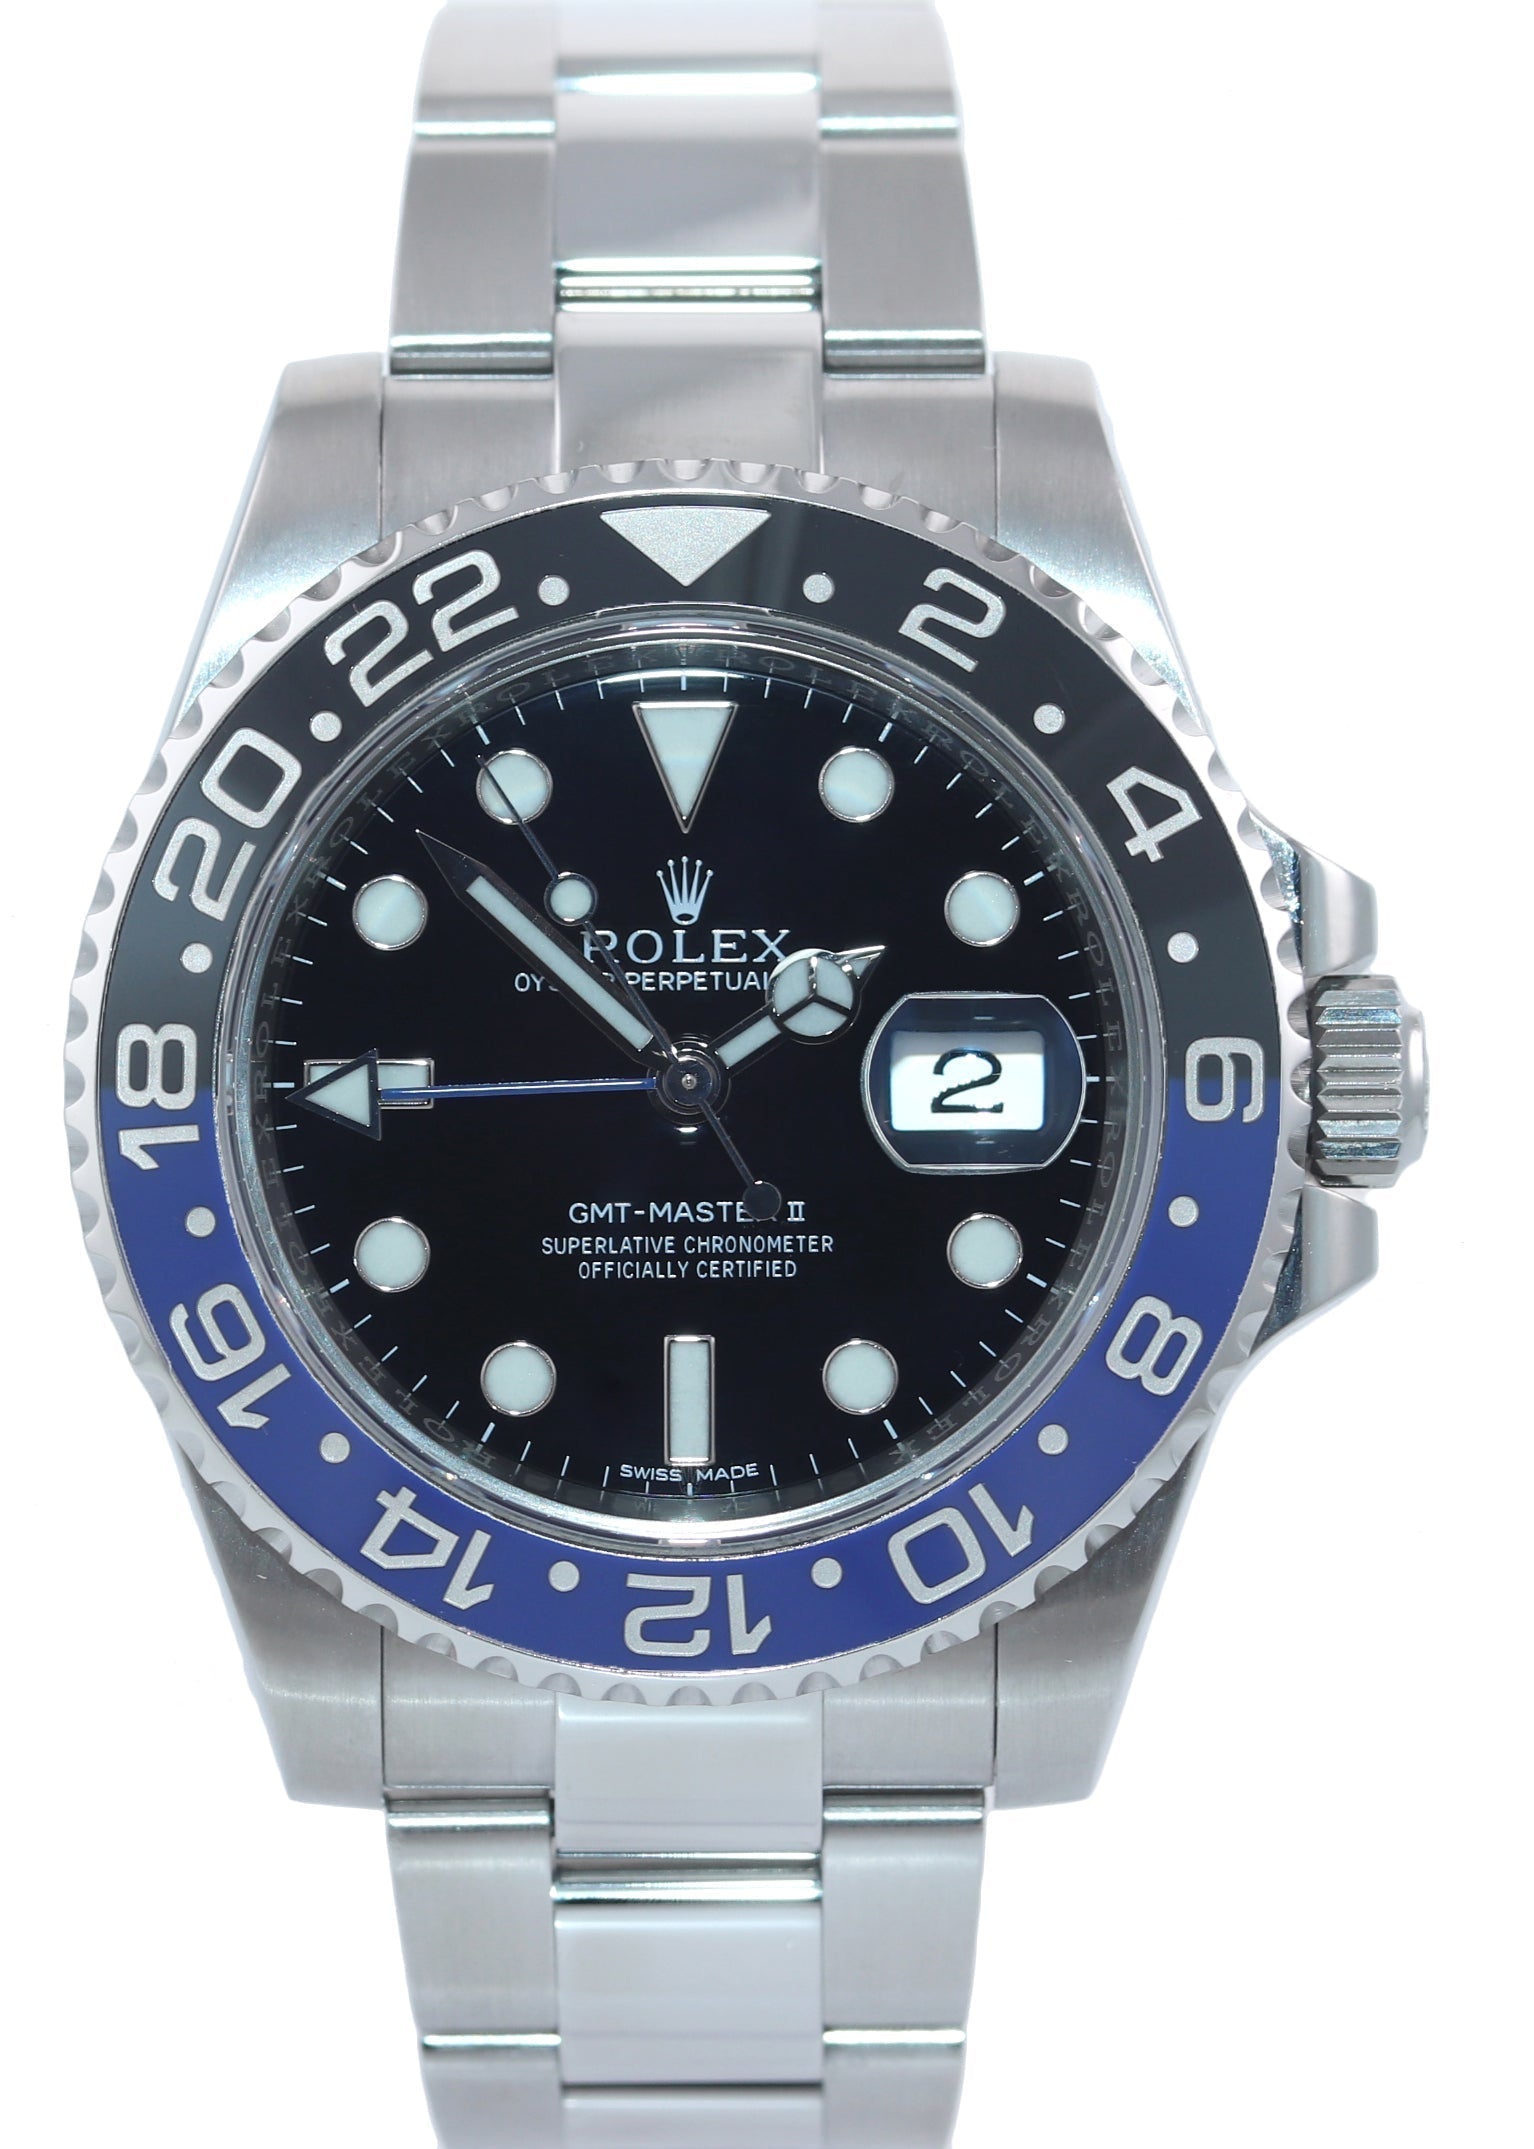 2019 Rolex GMT Master II 116710 BLNR Steel Ceramic Batman Blue Watch Box